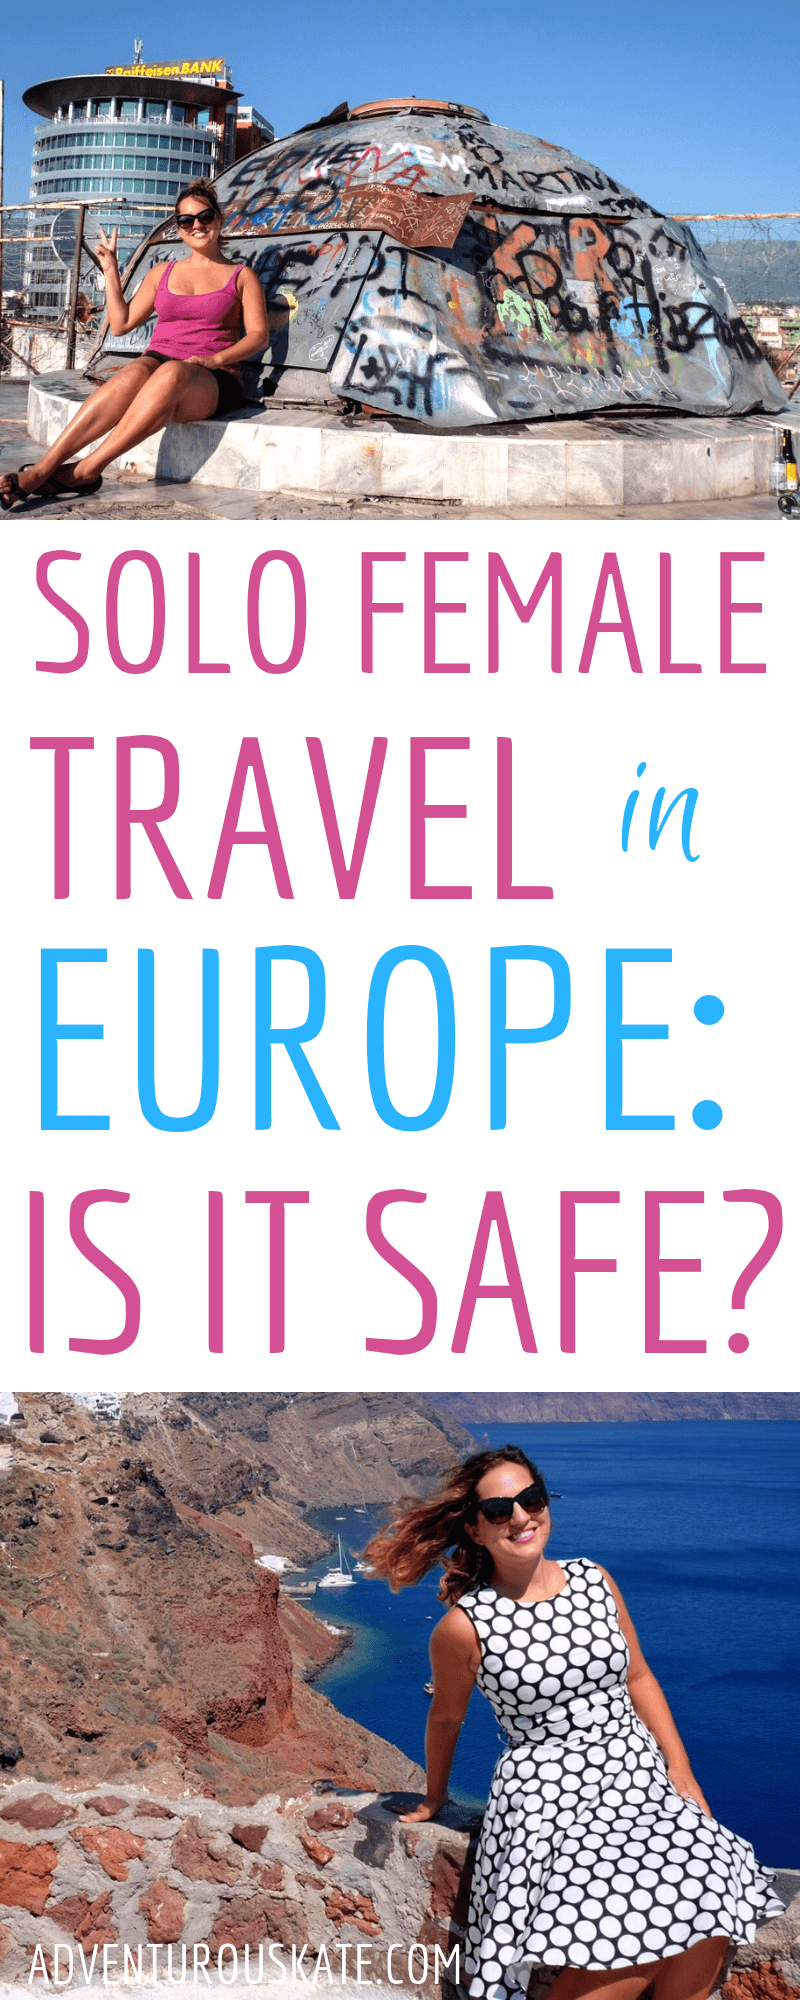 voyage solo femme europe